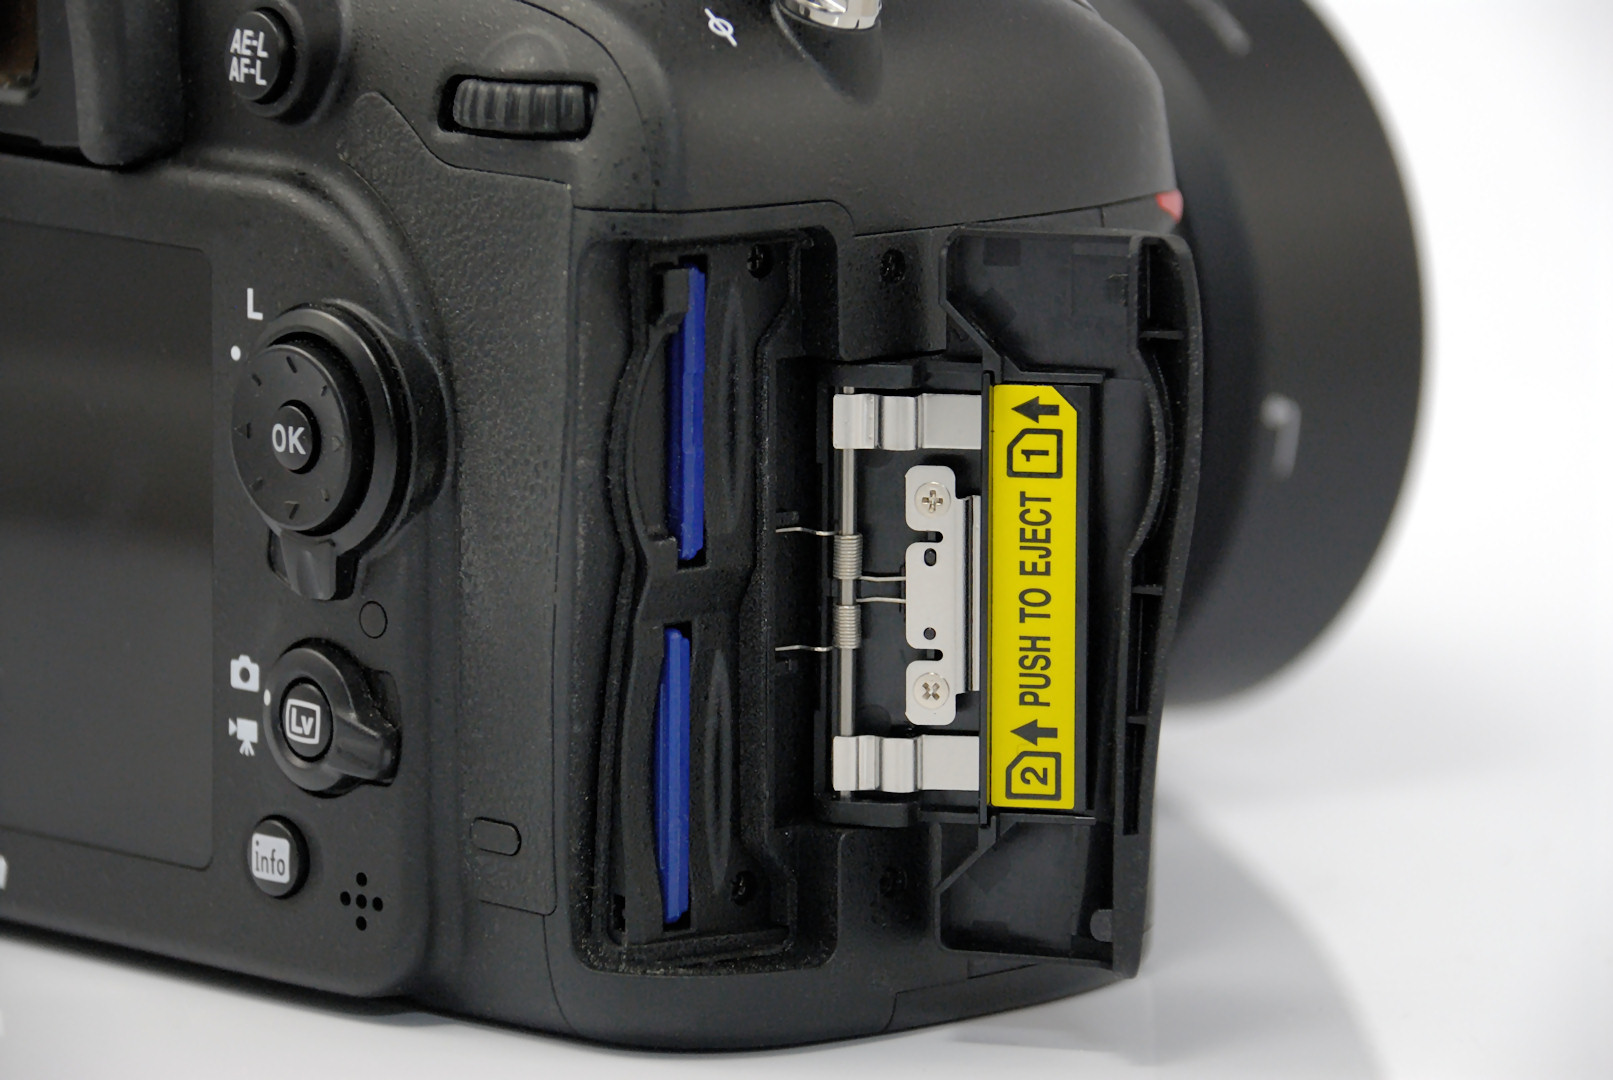 Nikon D7100, Reflex, Entry-level, slot SD